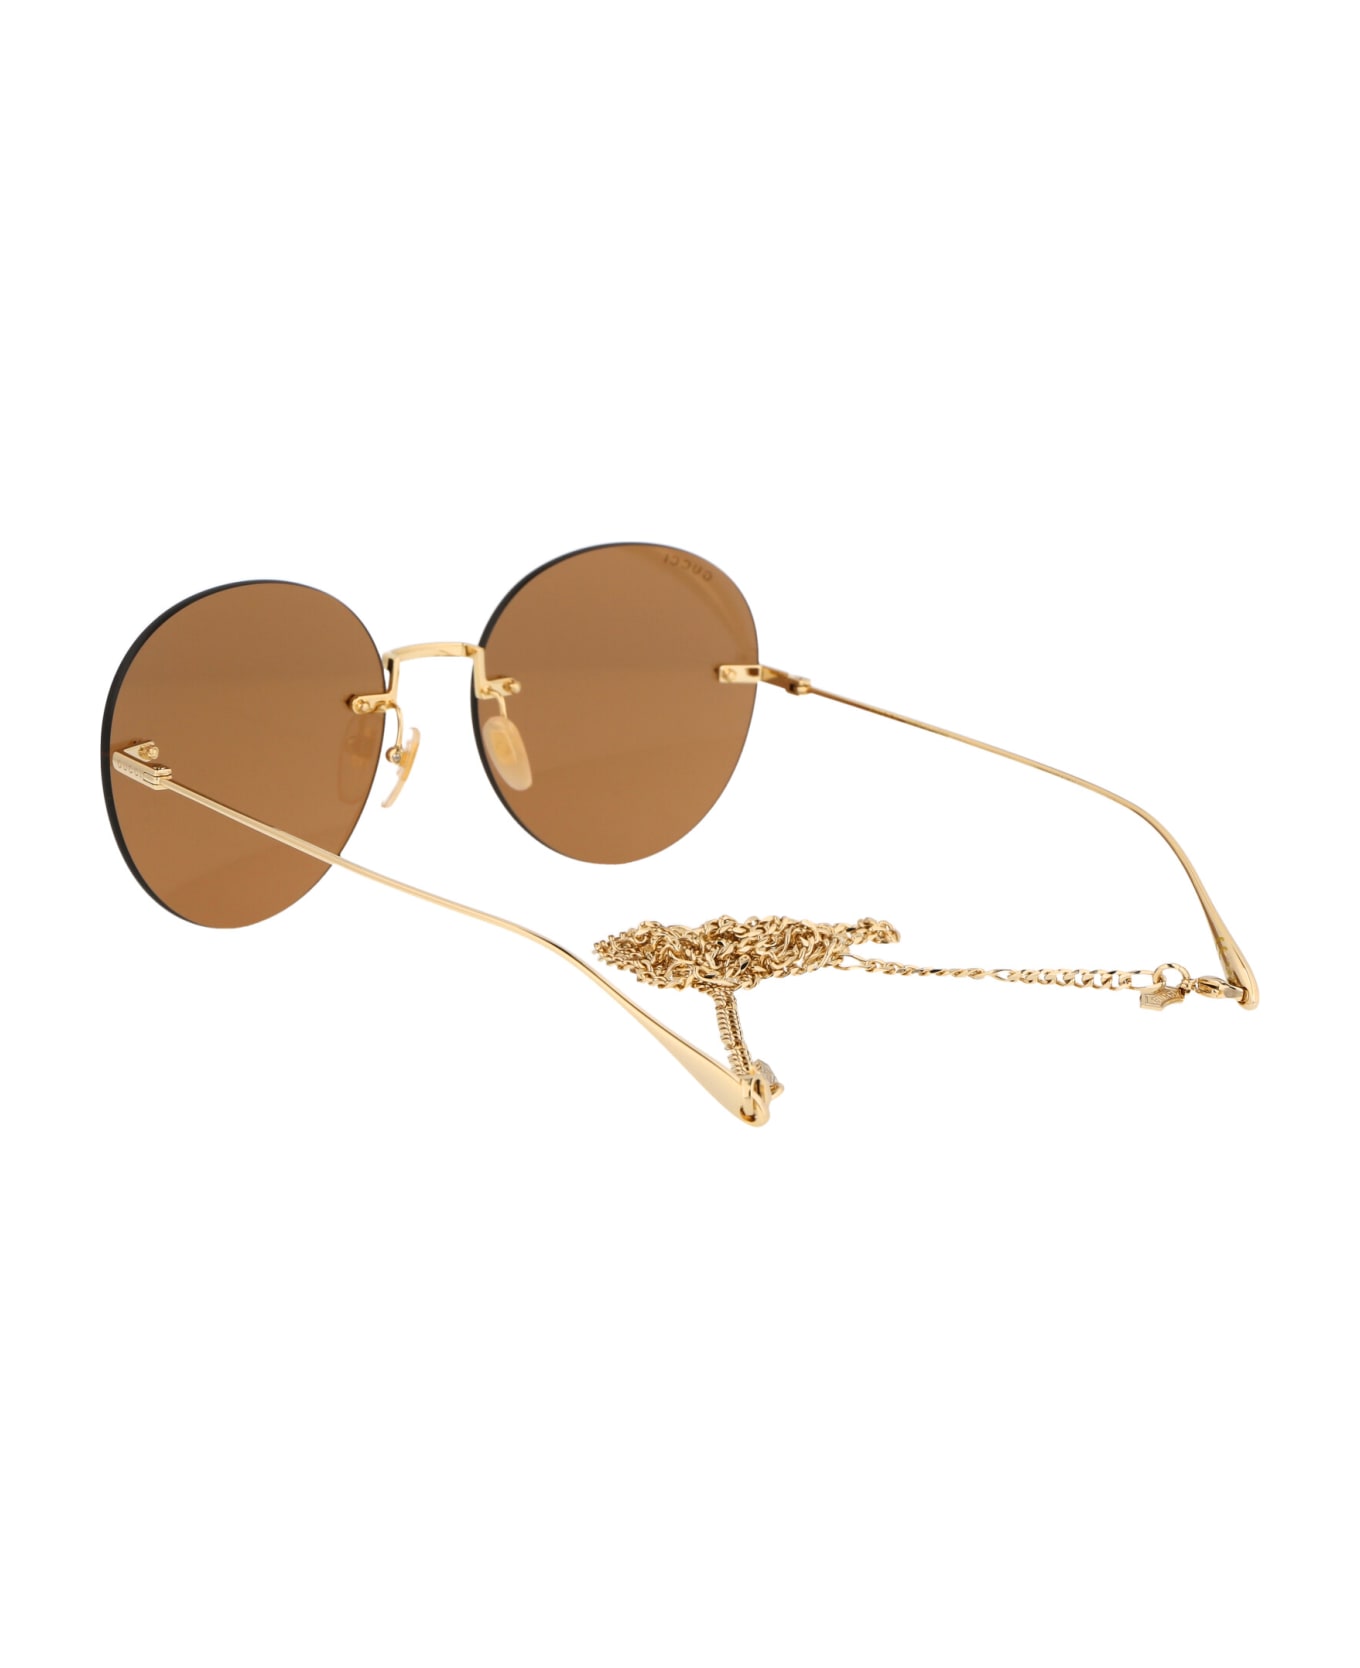 Gucci Eyewear Gg1149s Sunglasses - 003 GOLD GOLD BROWN